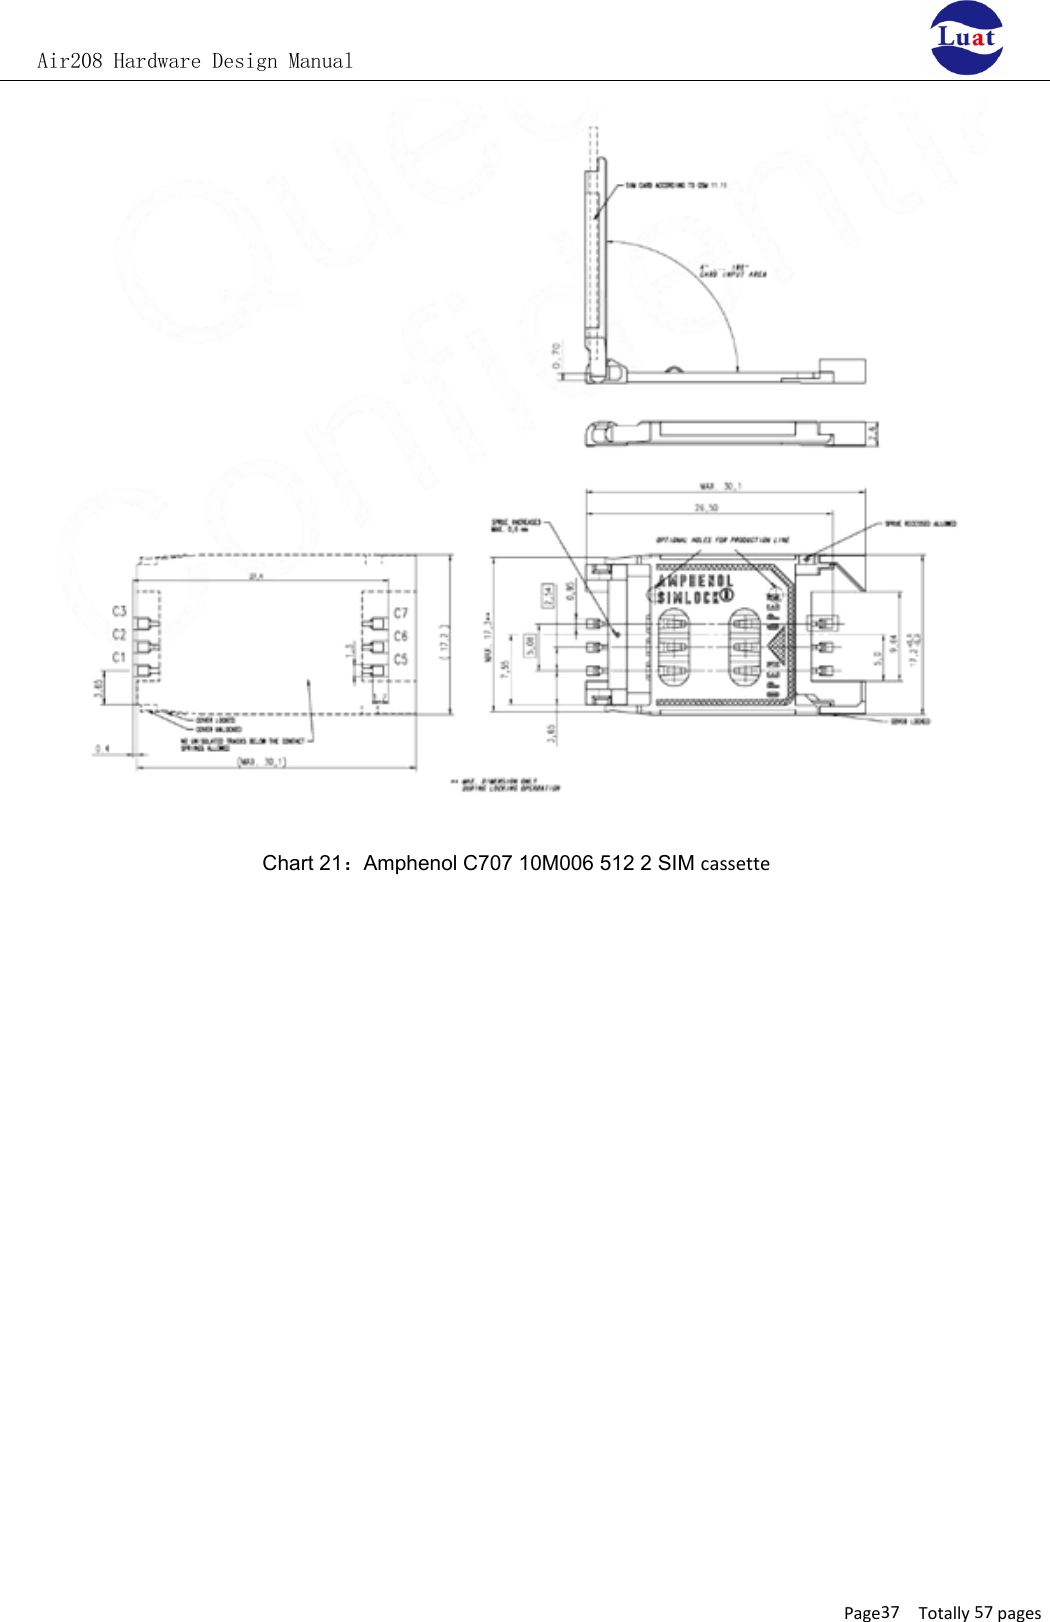 Air208 Hardware Design ManualPage37 Totally 57 pagesChart 21：Amphenol C707 10M006 512 2 SIM cassette